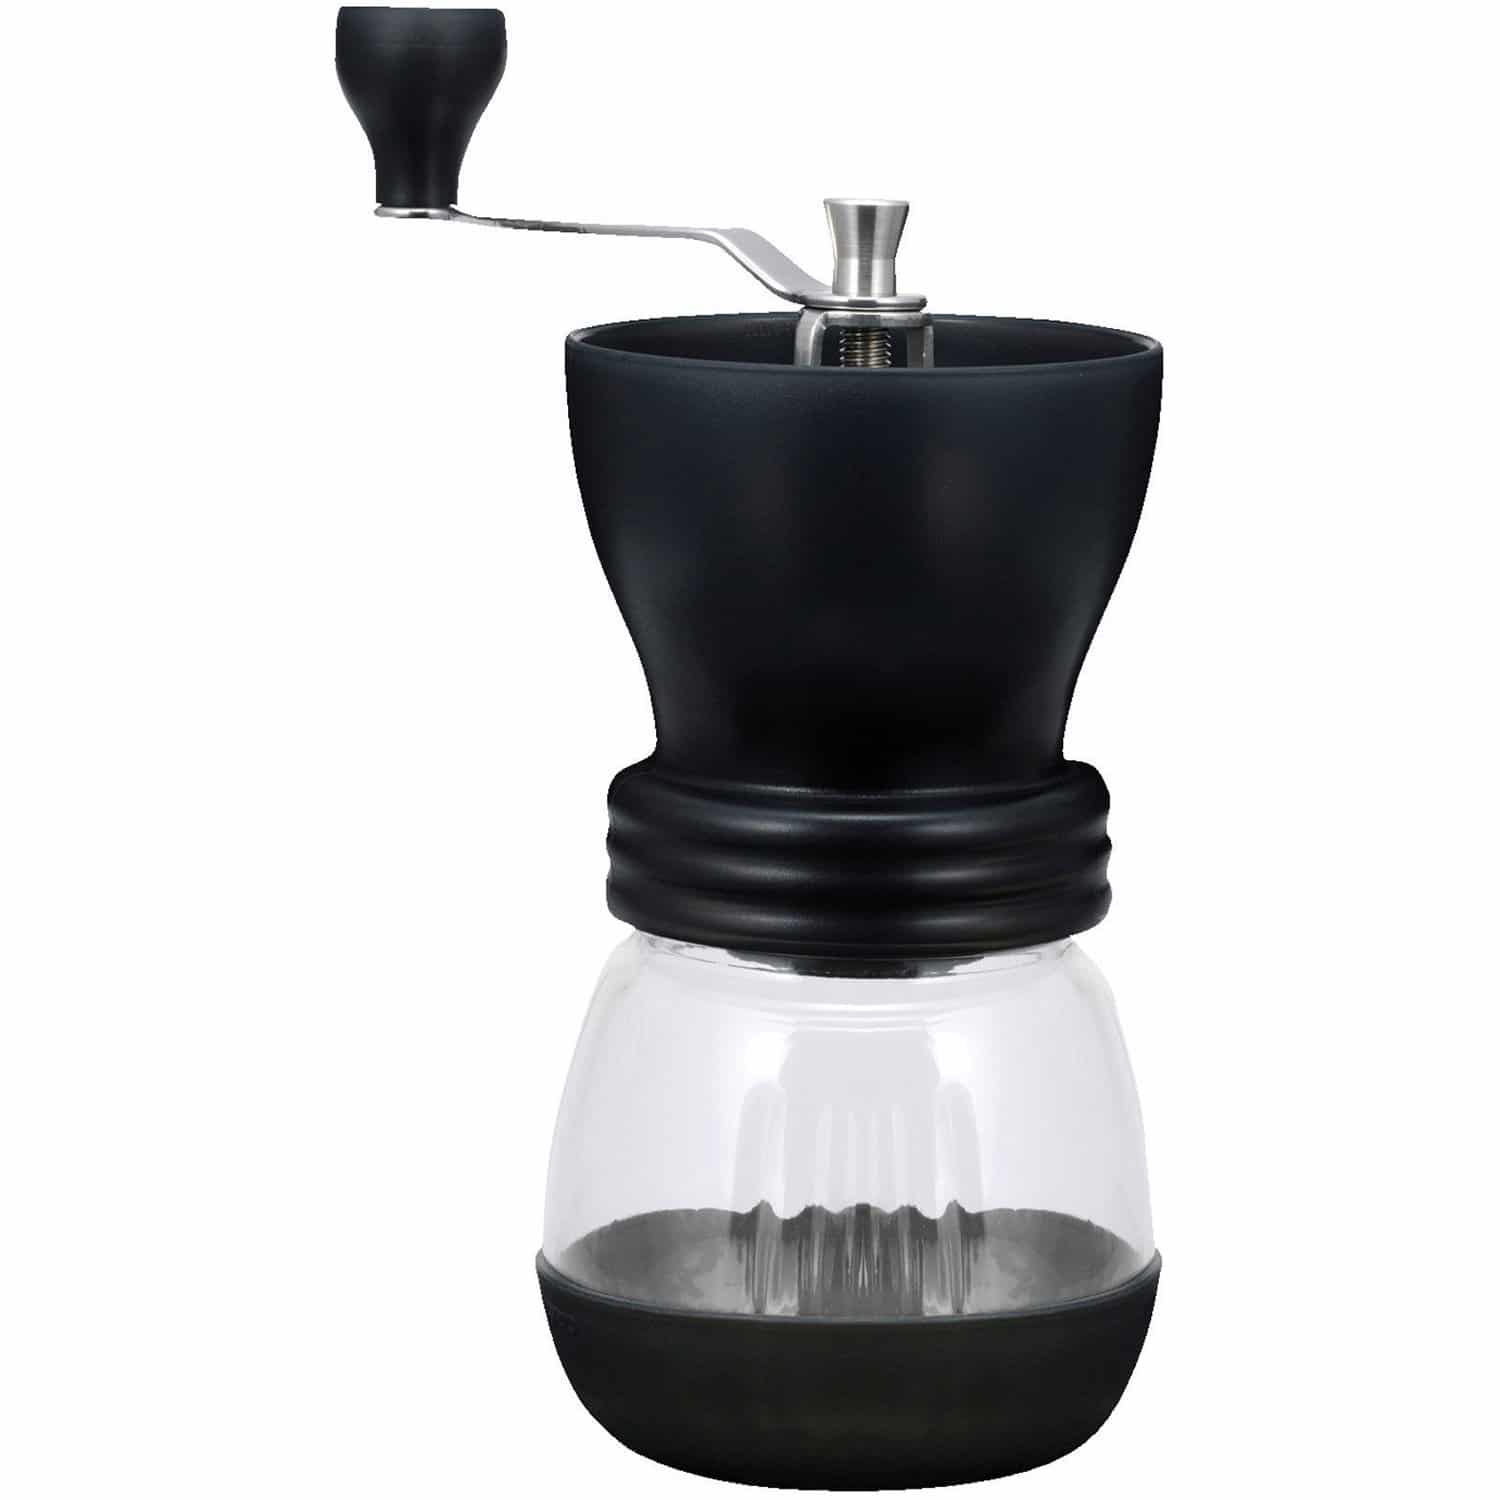 Kyocera Advanced Ceramic Coffee Grinder